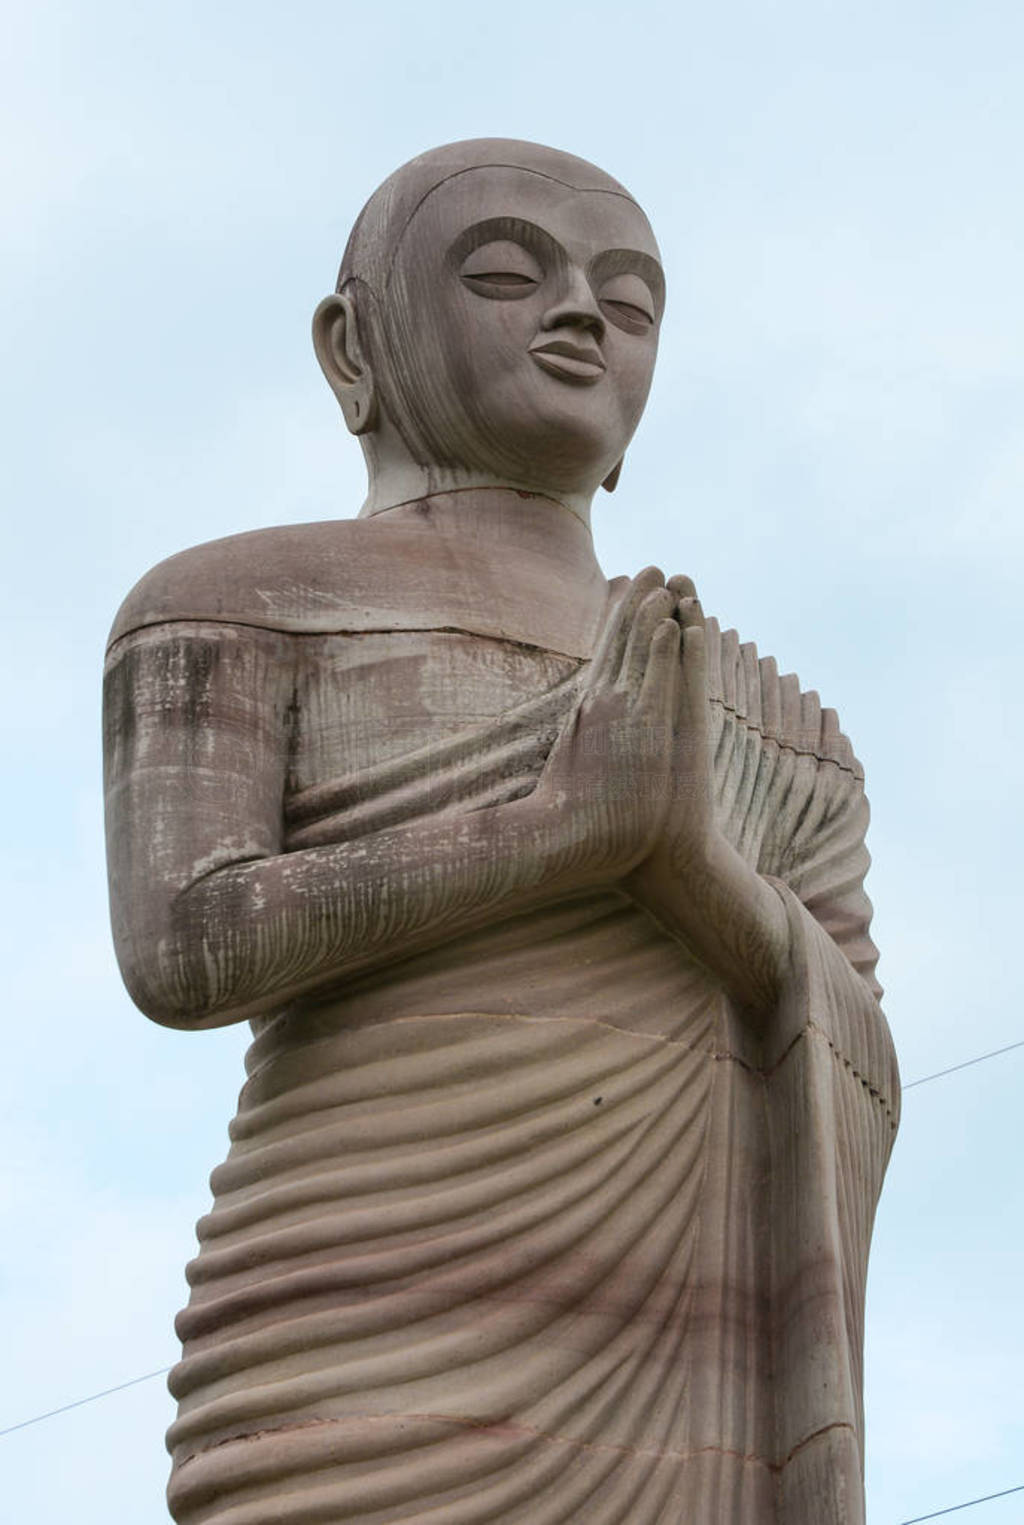 Giant Buddha Statue in Gaya, India